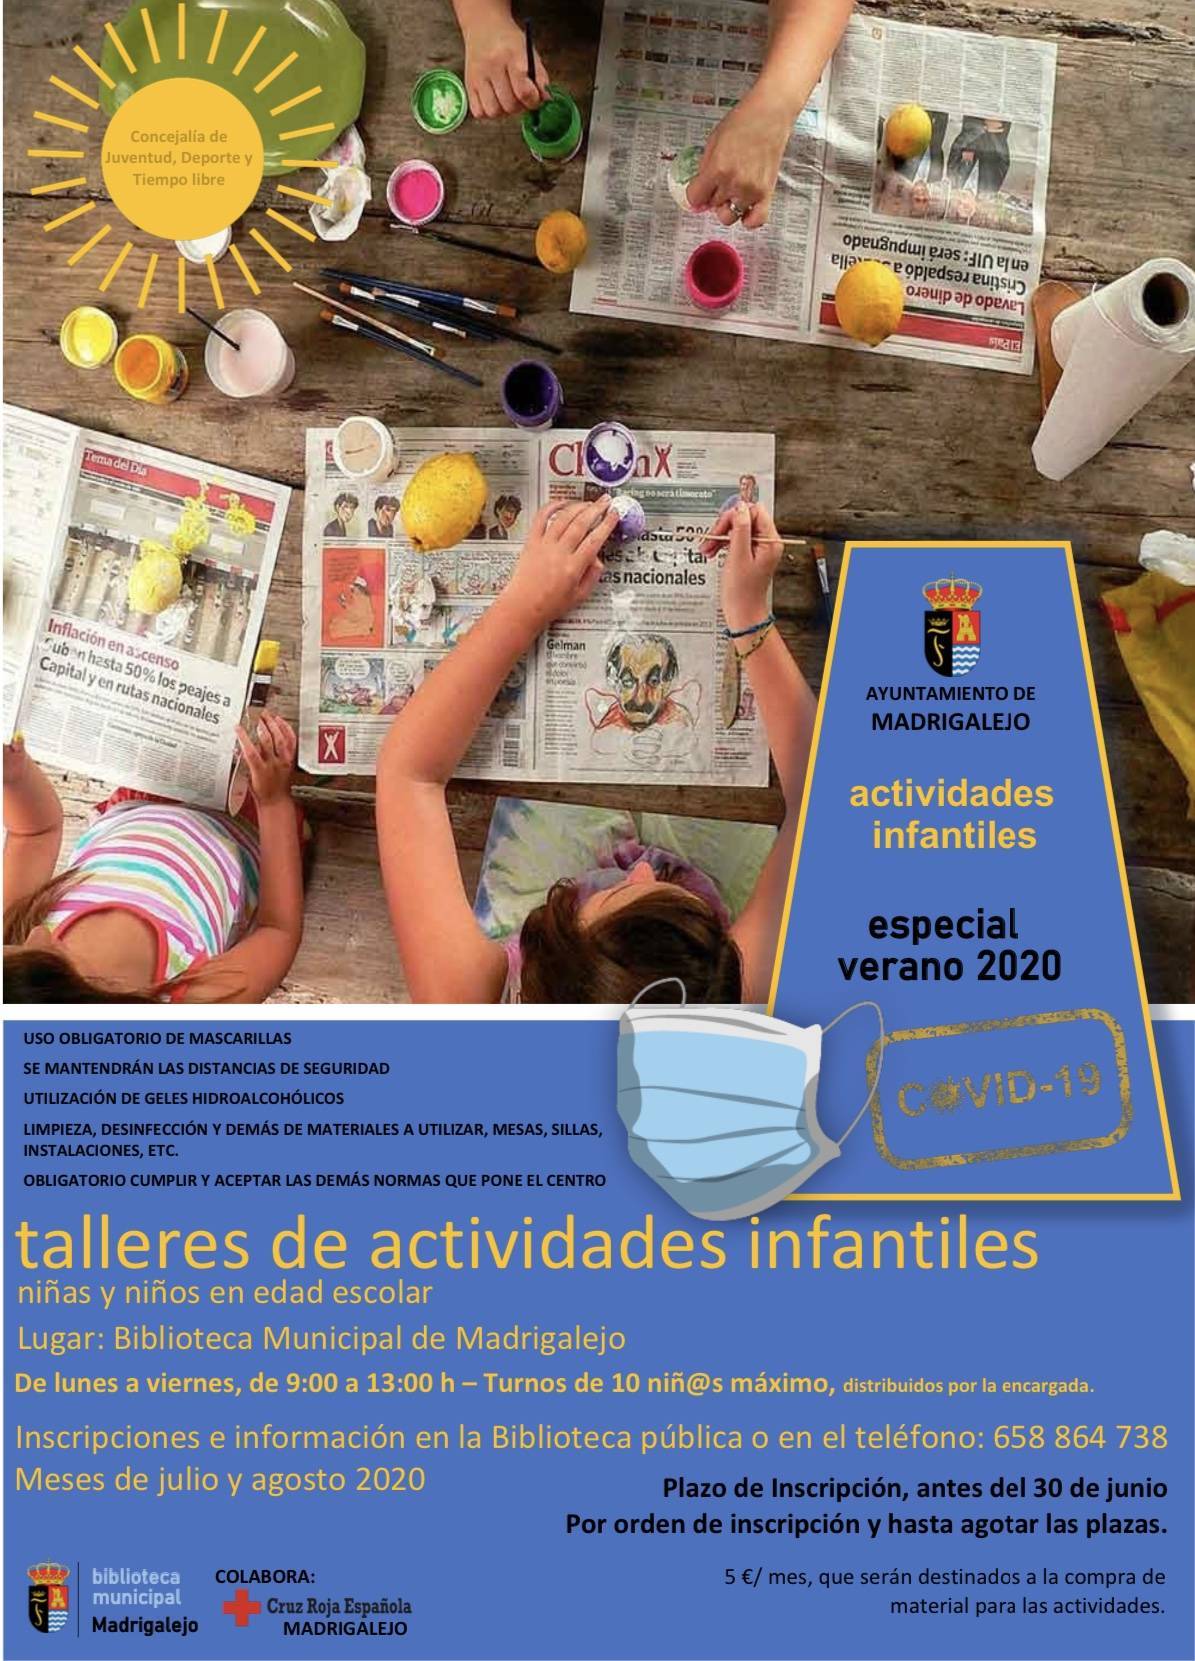 Taller de actividades infantiles verano 2020 - Madrigalejo (Cáceres)